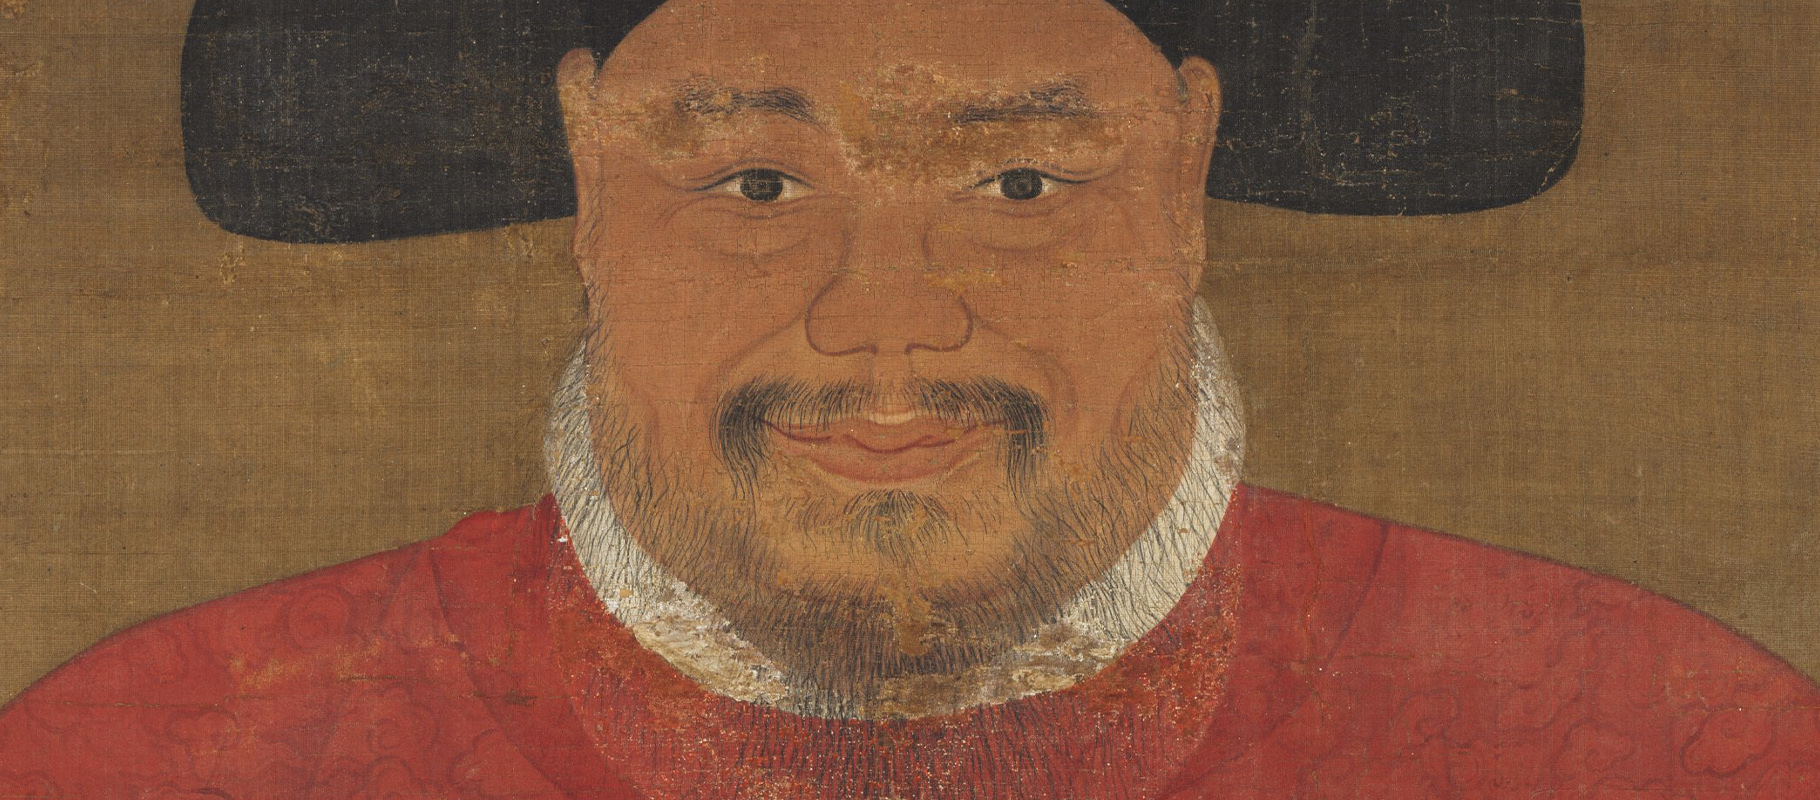 Chinese portrait disturbed pigments